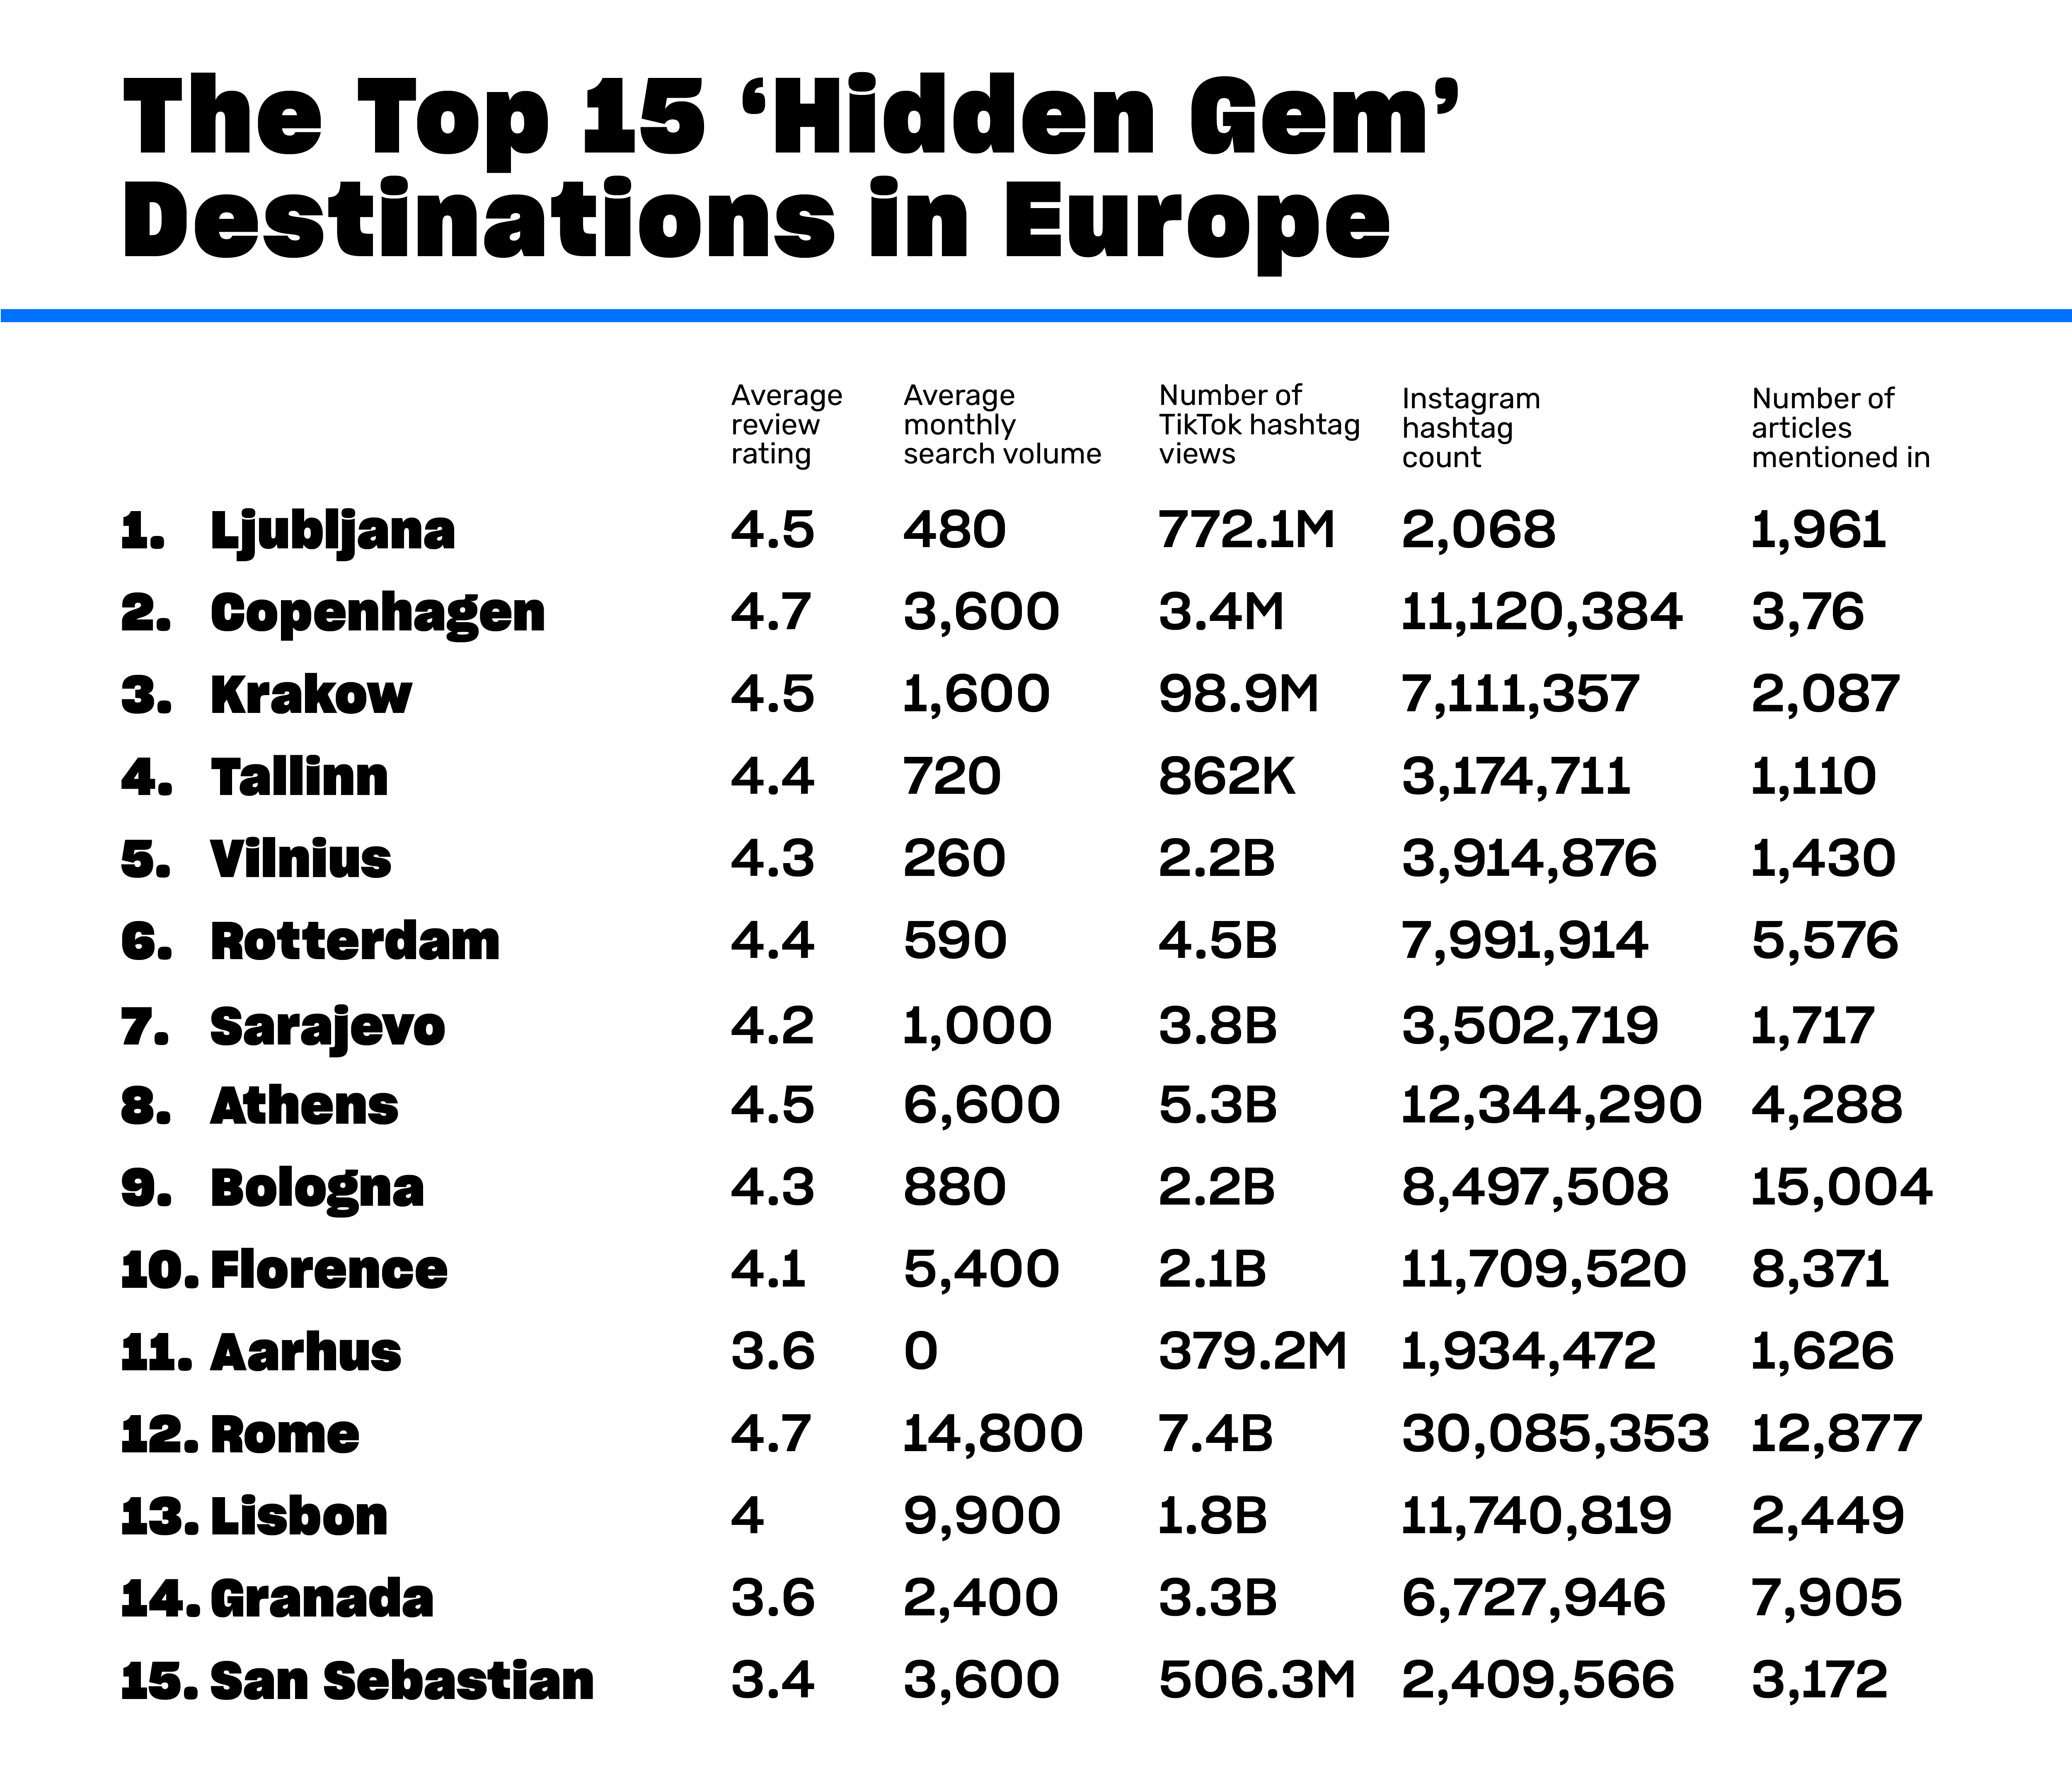 The Top 15 Hidden Gem Destinations in Europe